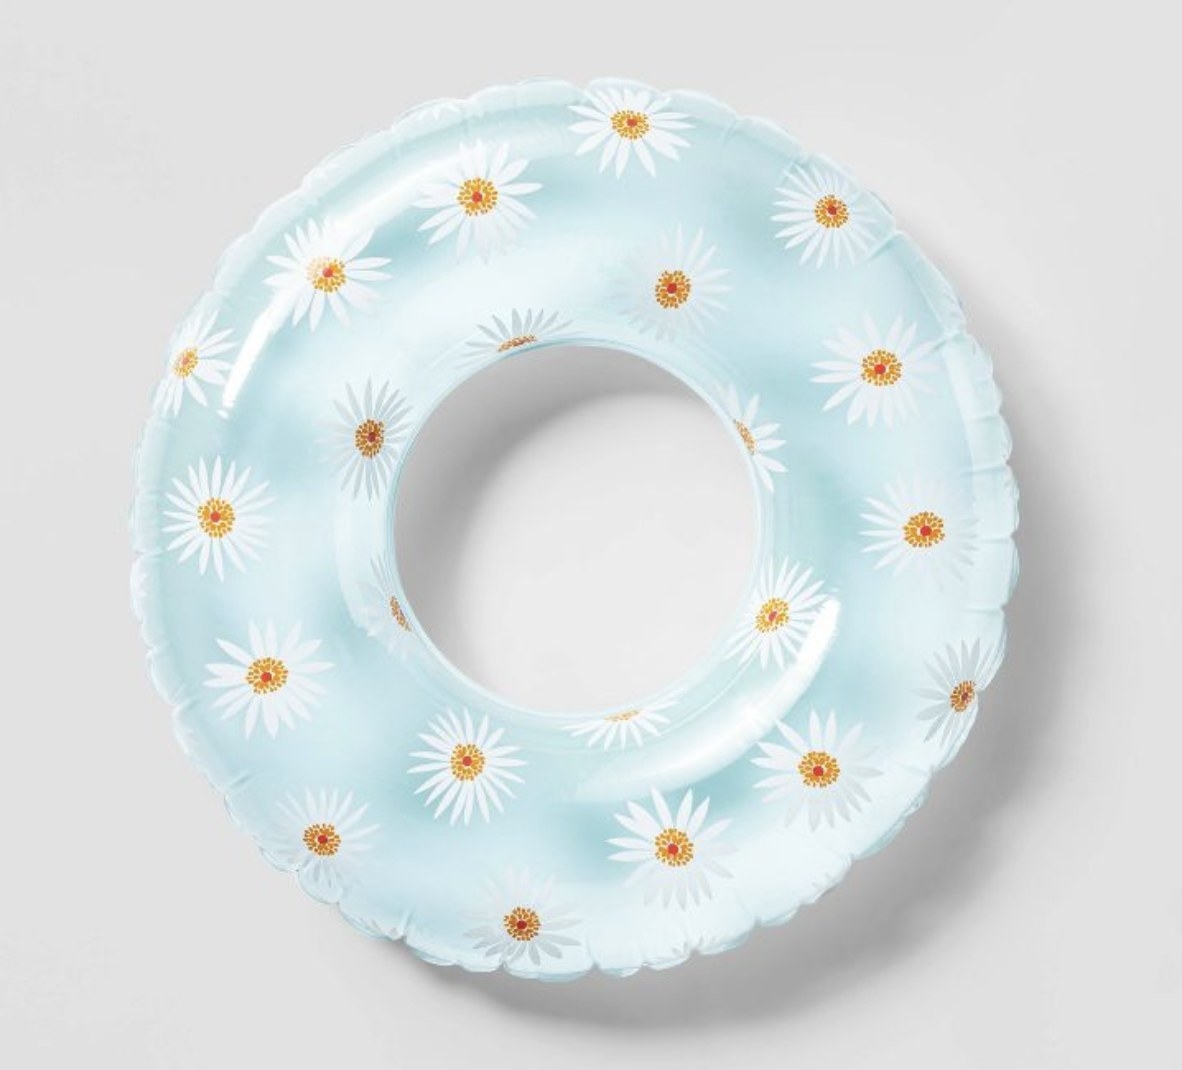 A daisy inflatable pool tube